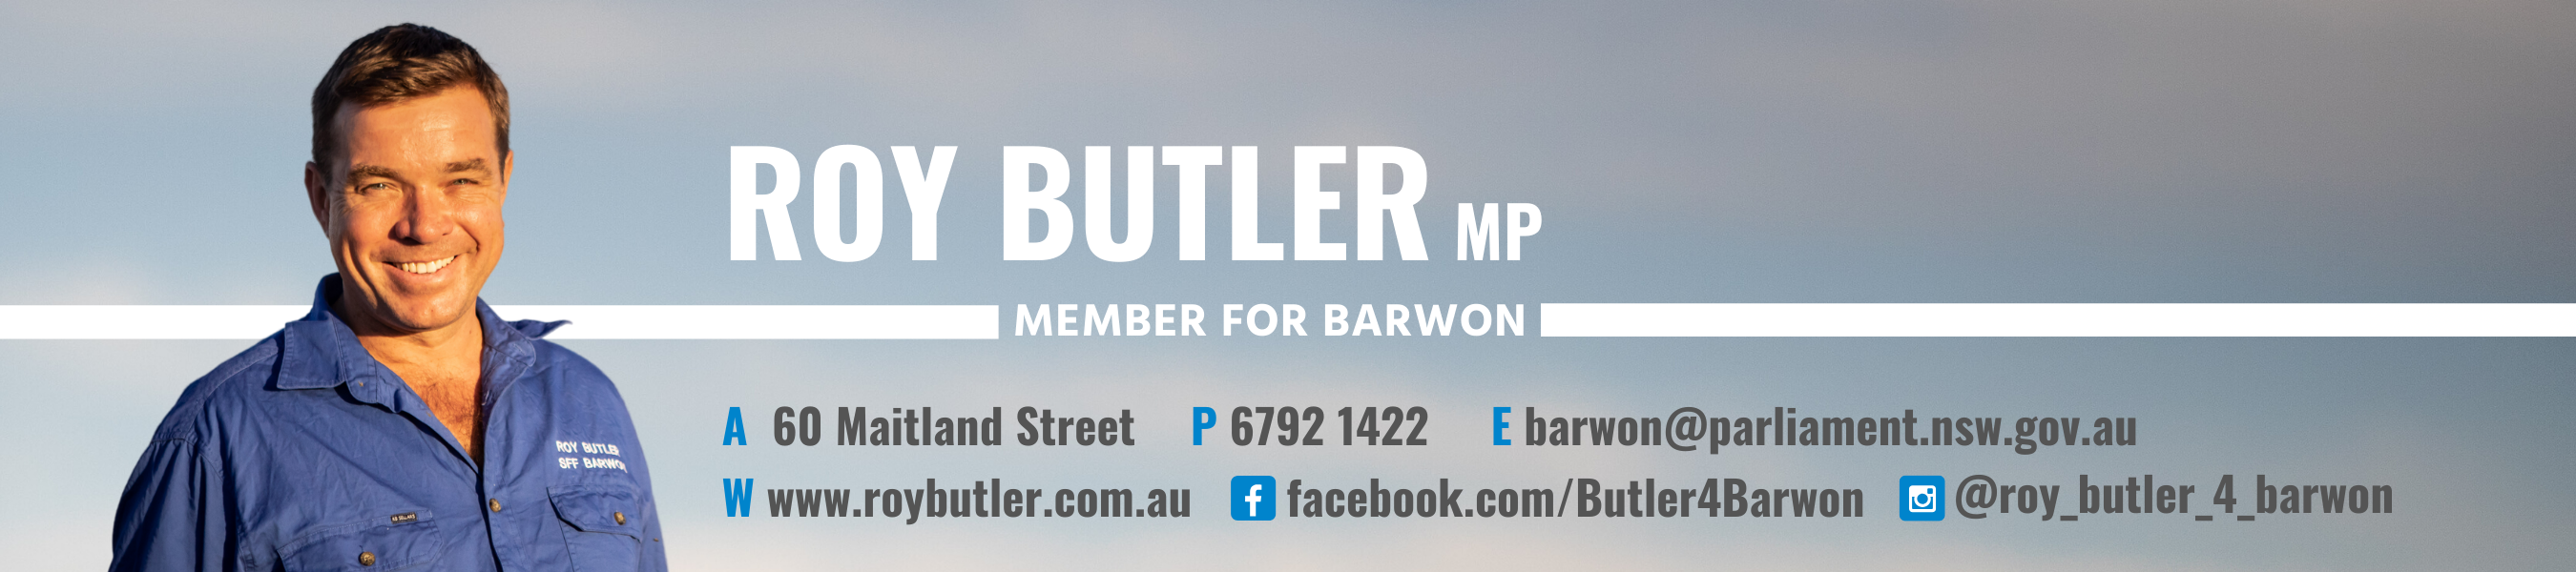 Roy Butler MP Local Member